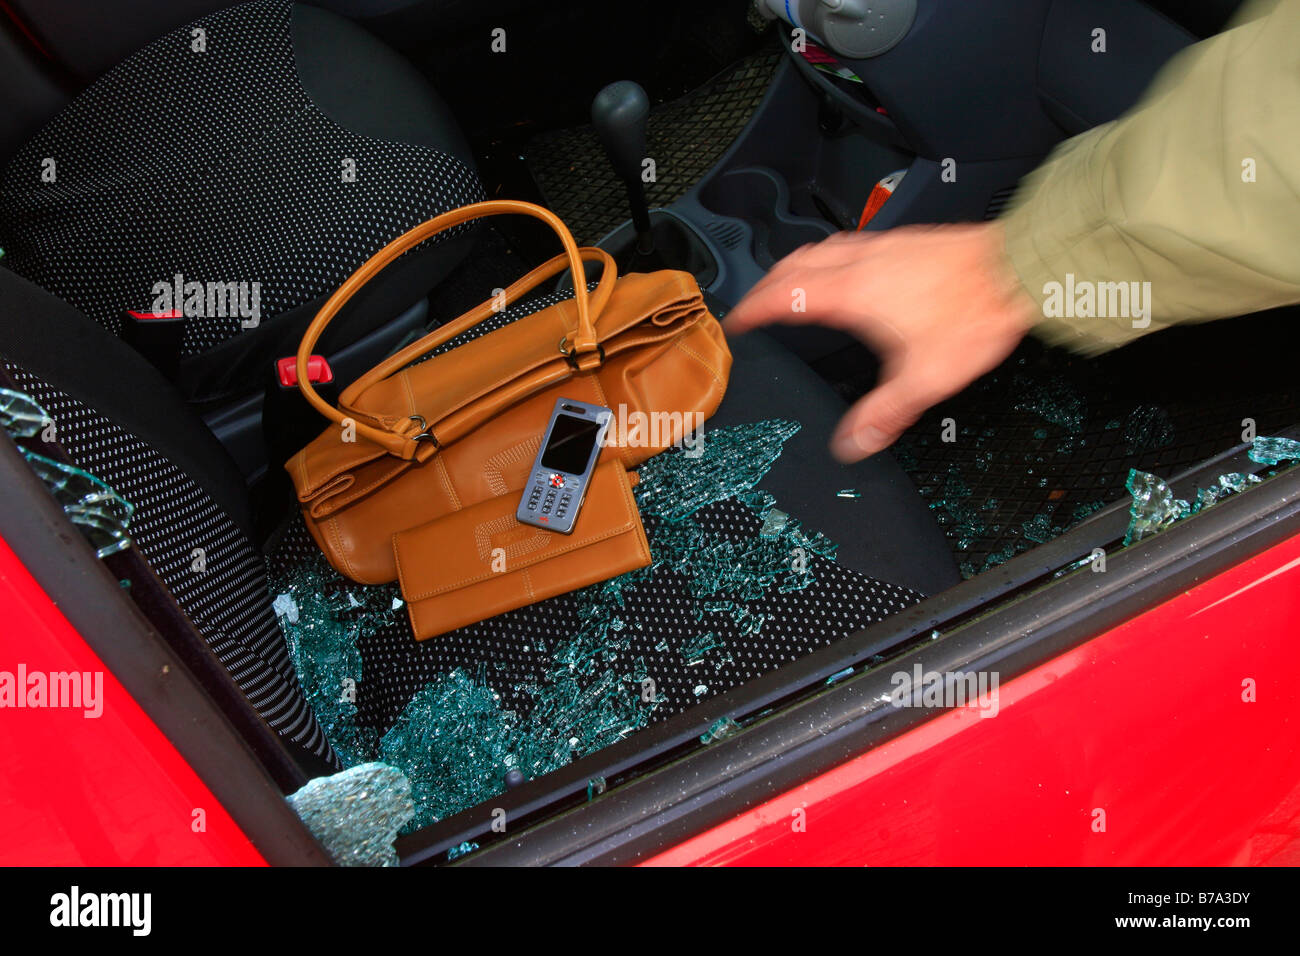 Car burglary, hand grasps through the side window at valuables, i.e. handbag, purse and mobile phone Stock Photo